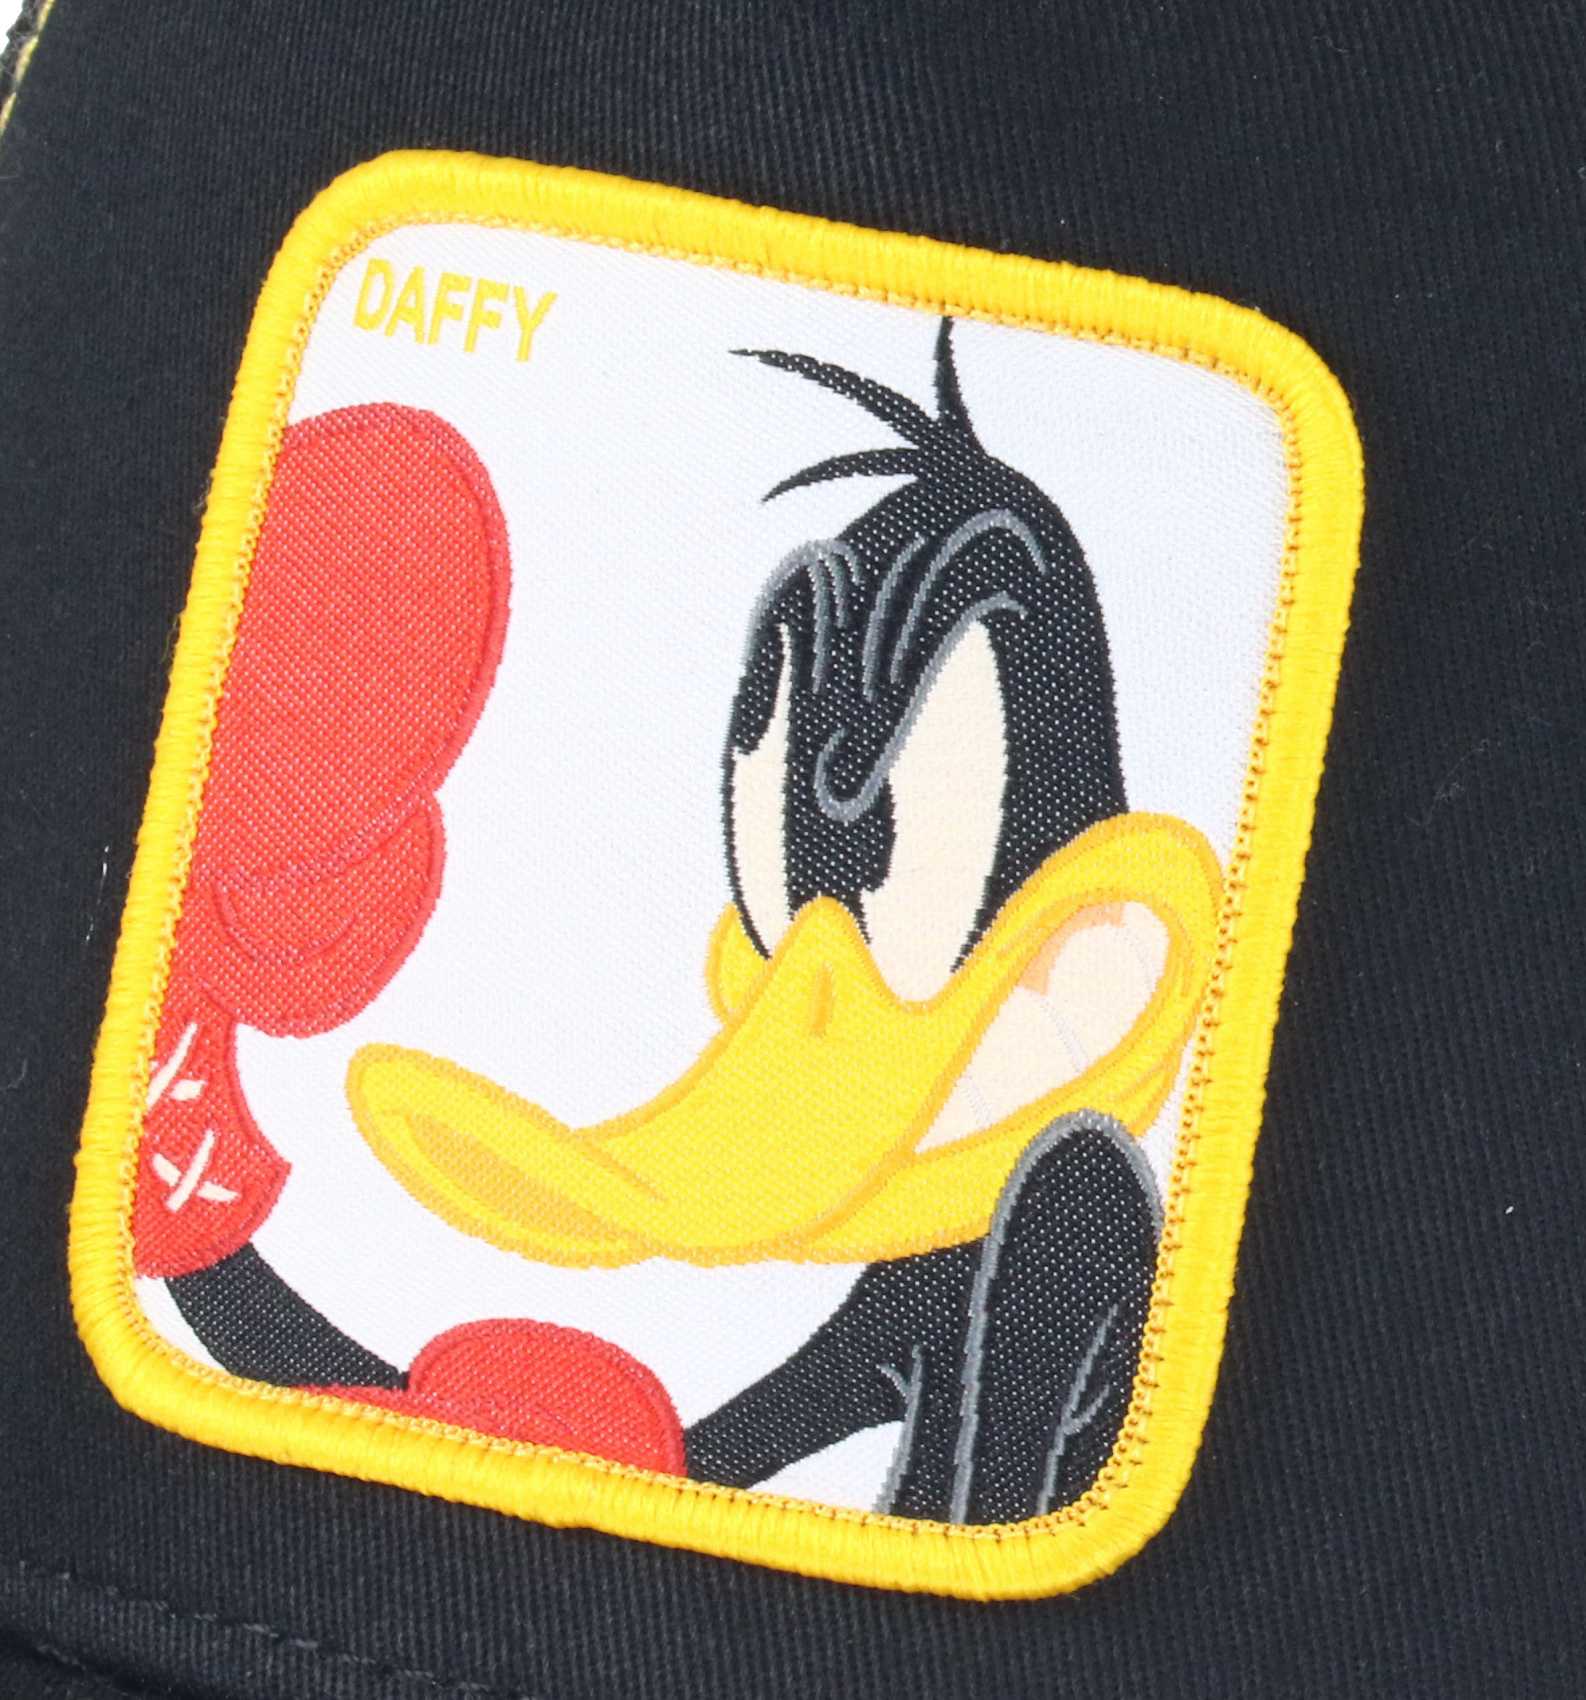 Daffy Duck Looney Tunes Trucker Cap Capslab